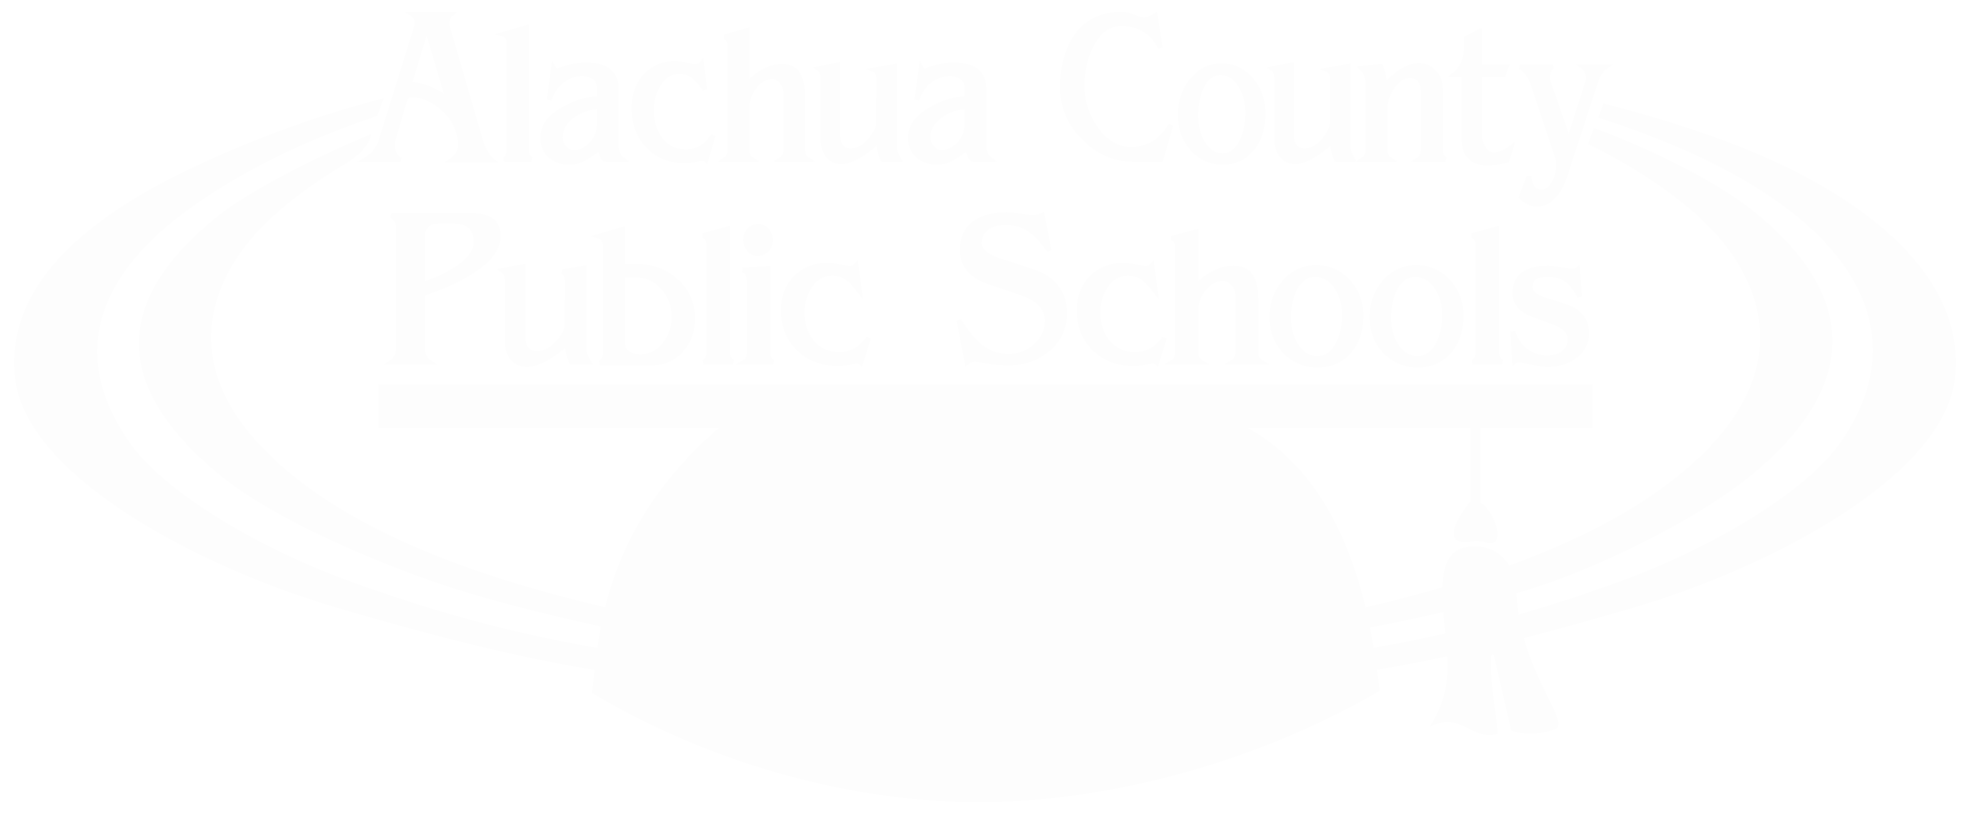 Alachua County Public Schools Logo